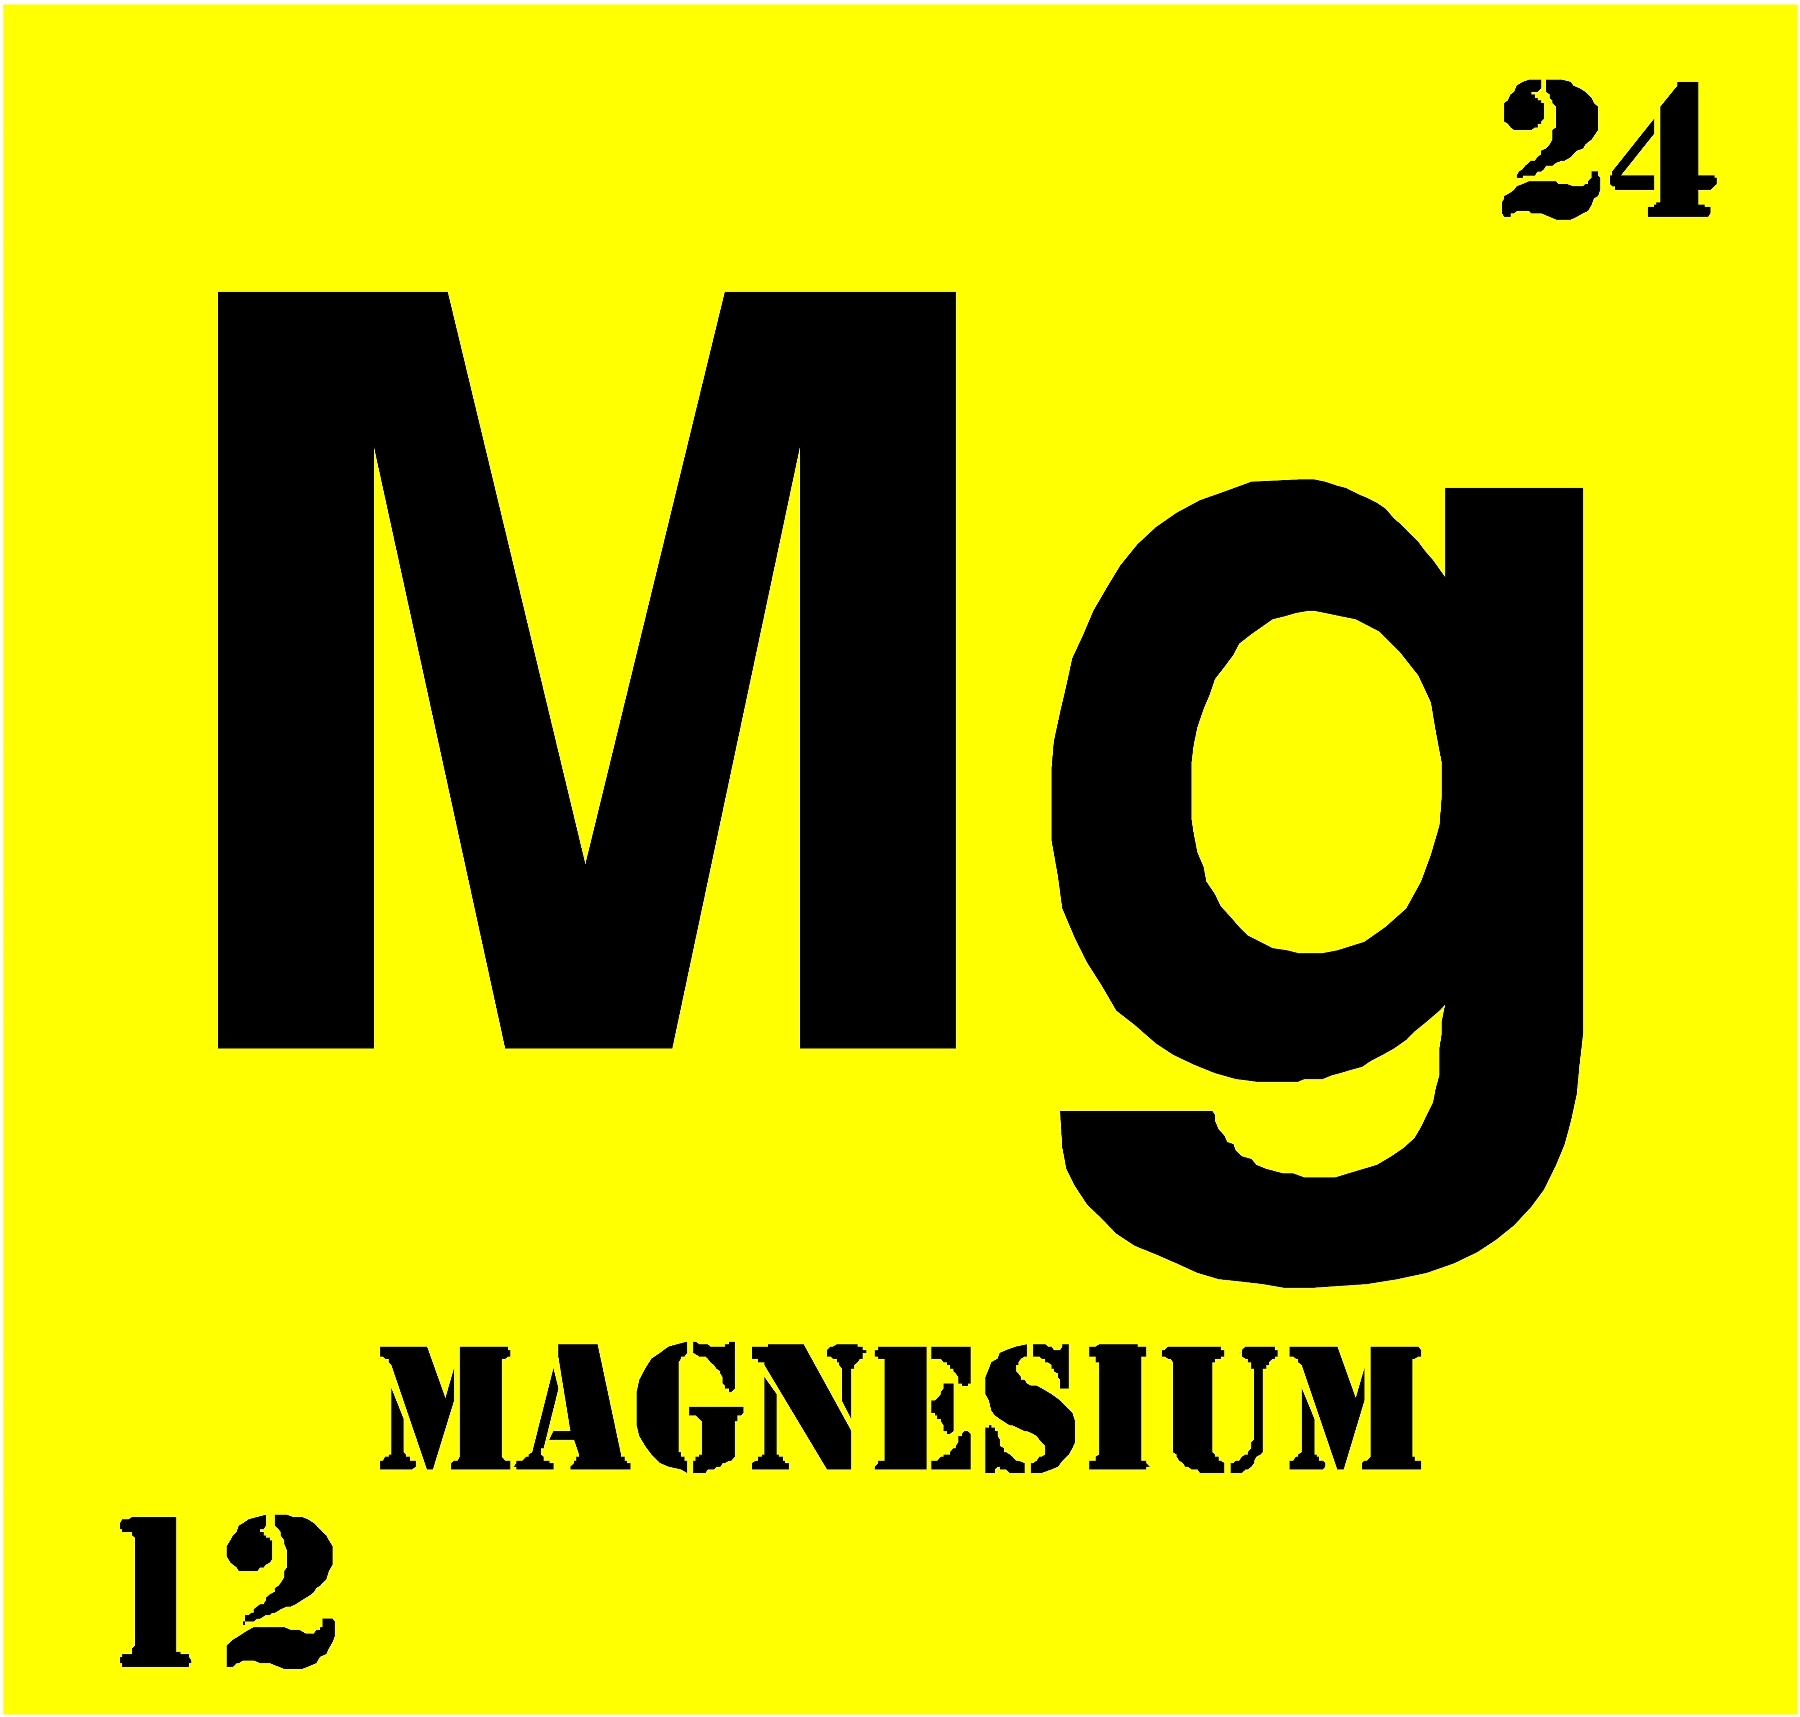 Магний название элемента. Магний химический элемент. Магний символ химического элемента. Магний элемент таблицы Менделеева. Магний химия элемент.